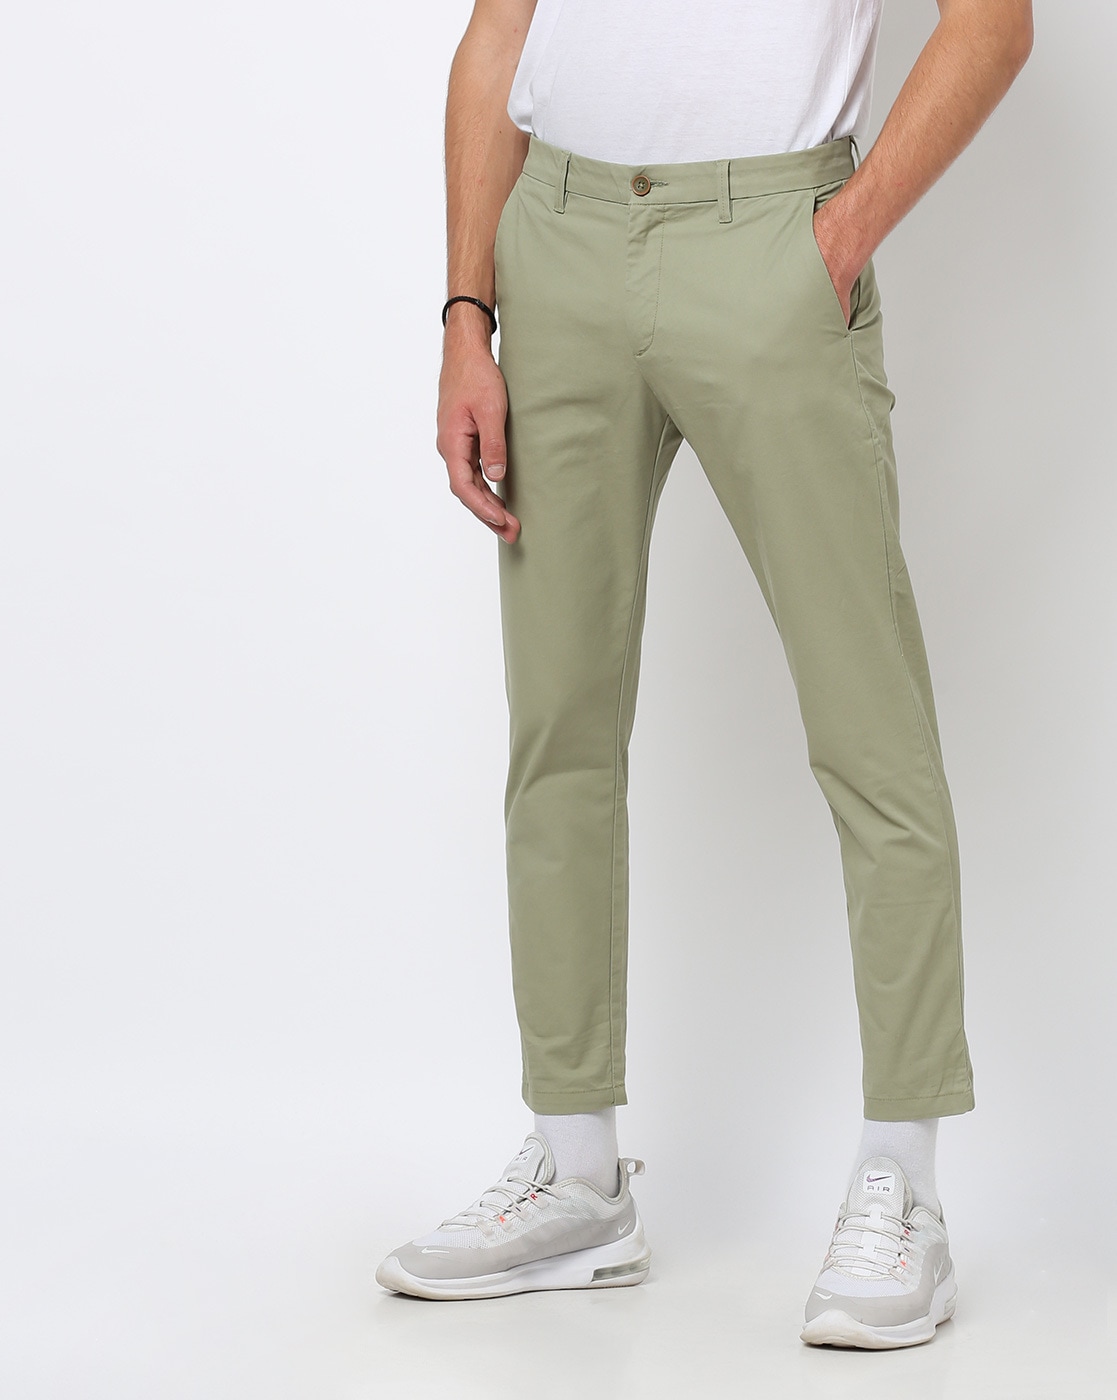 Green Pants - Floral Print Pants - Smocked Pants - Wide Leg Pants - Lulus